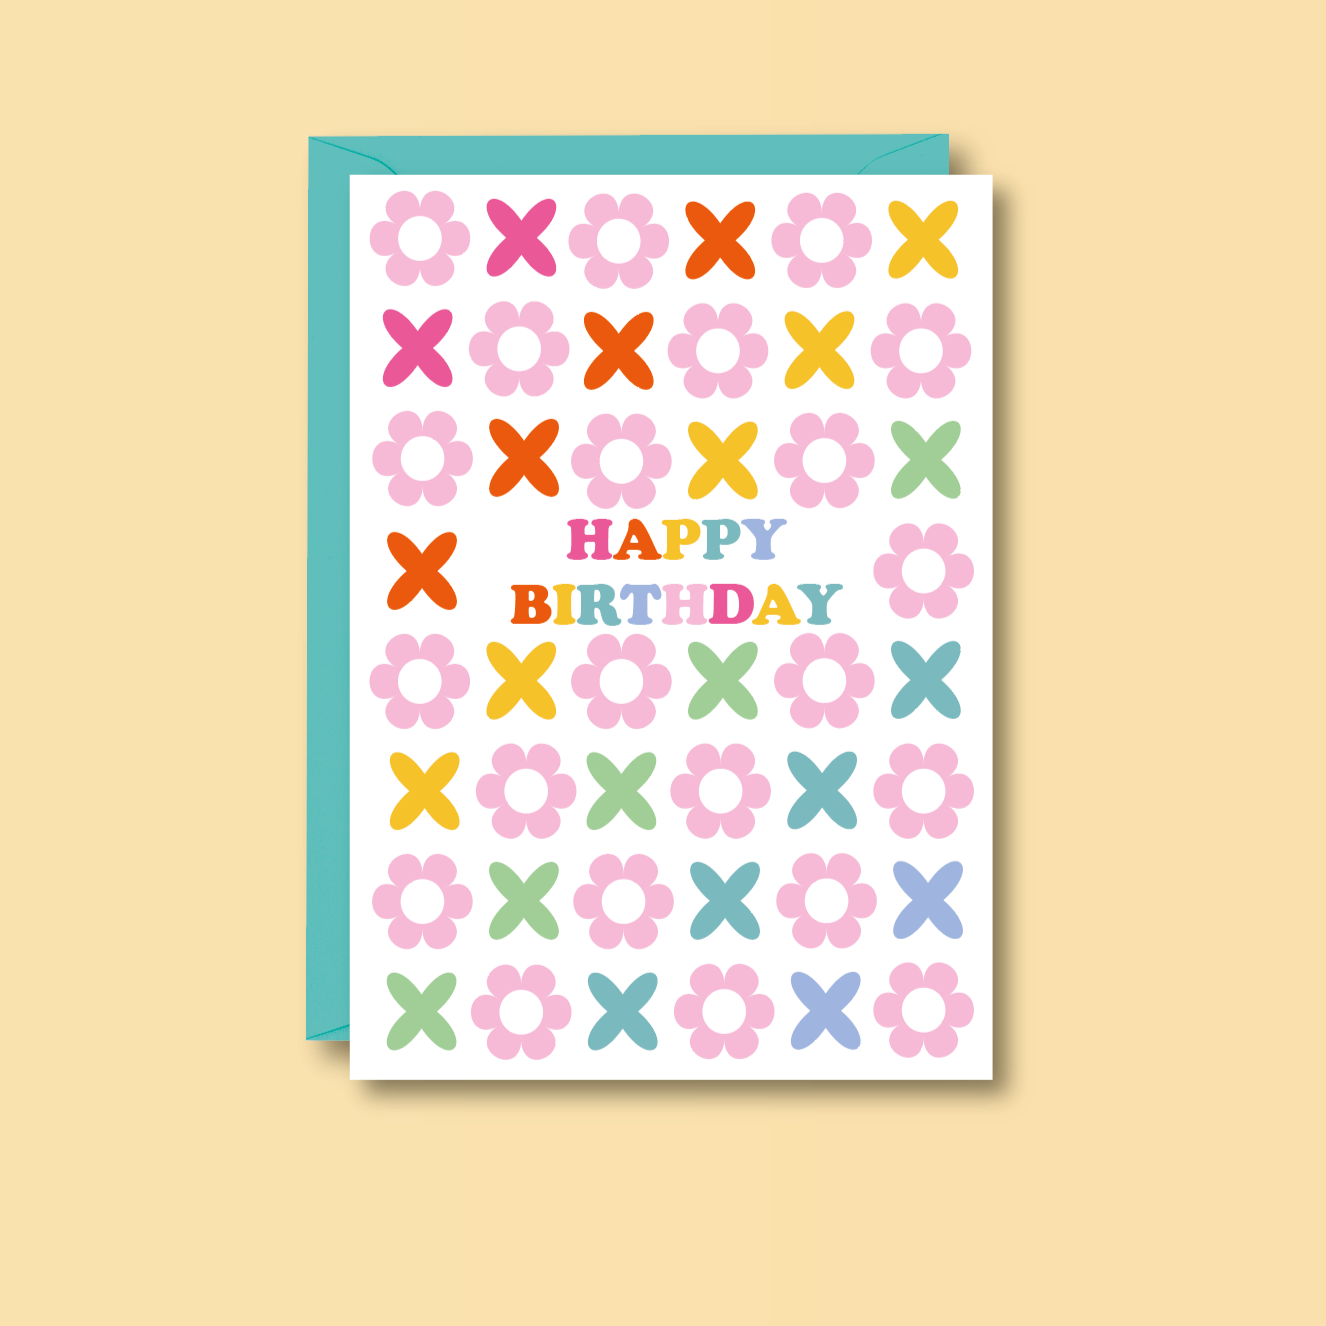 Happy Birthday Card 60's Pattern